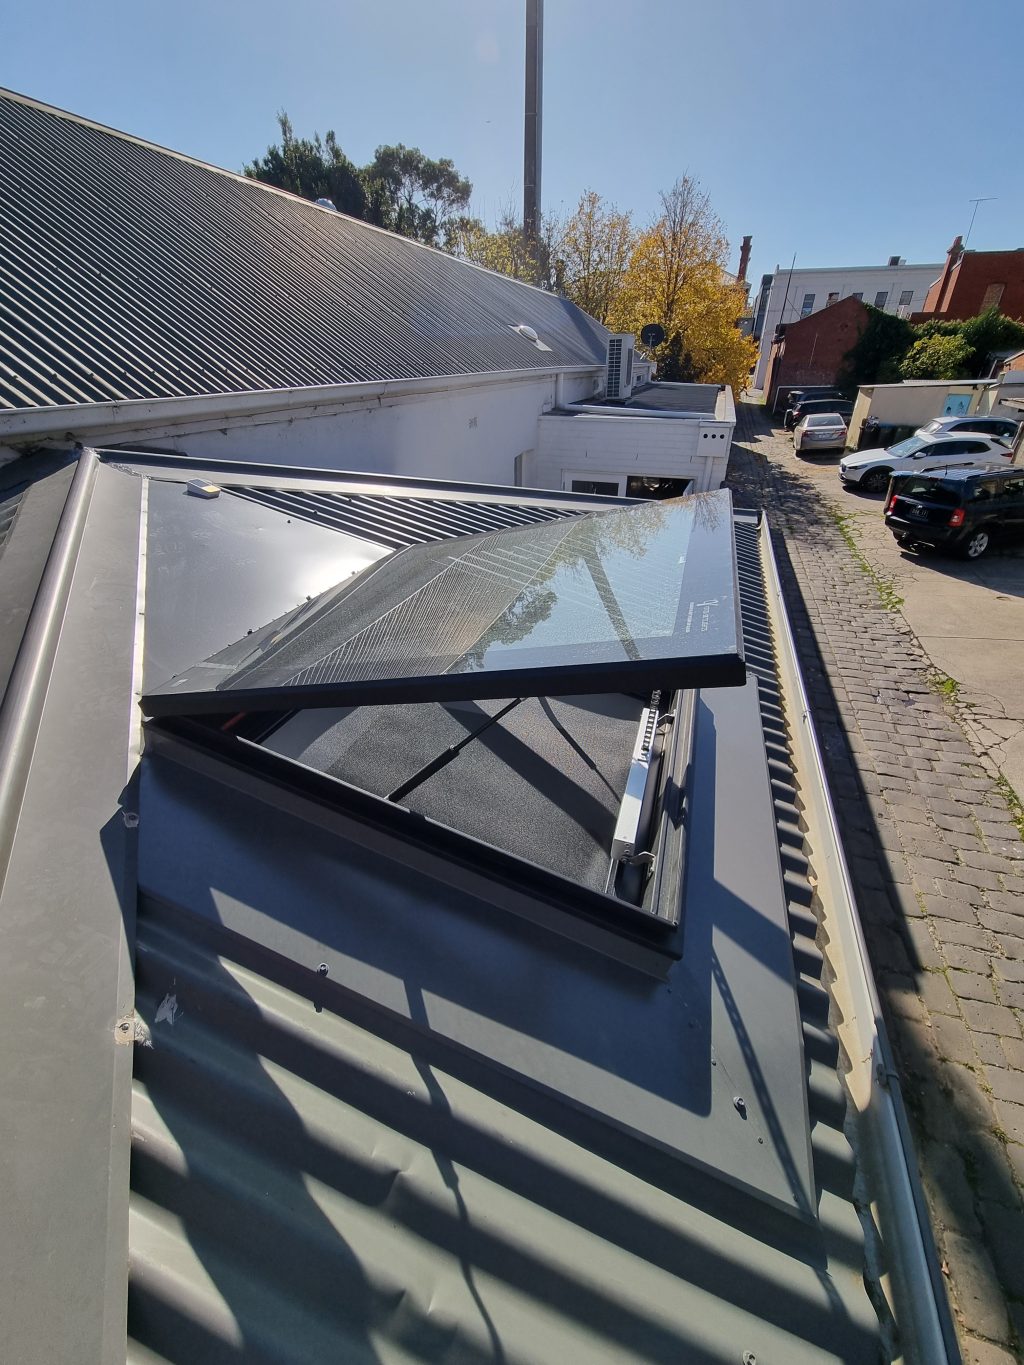 Operable skylight on metal roof